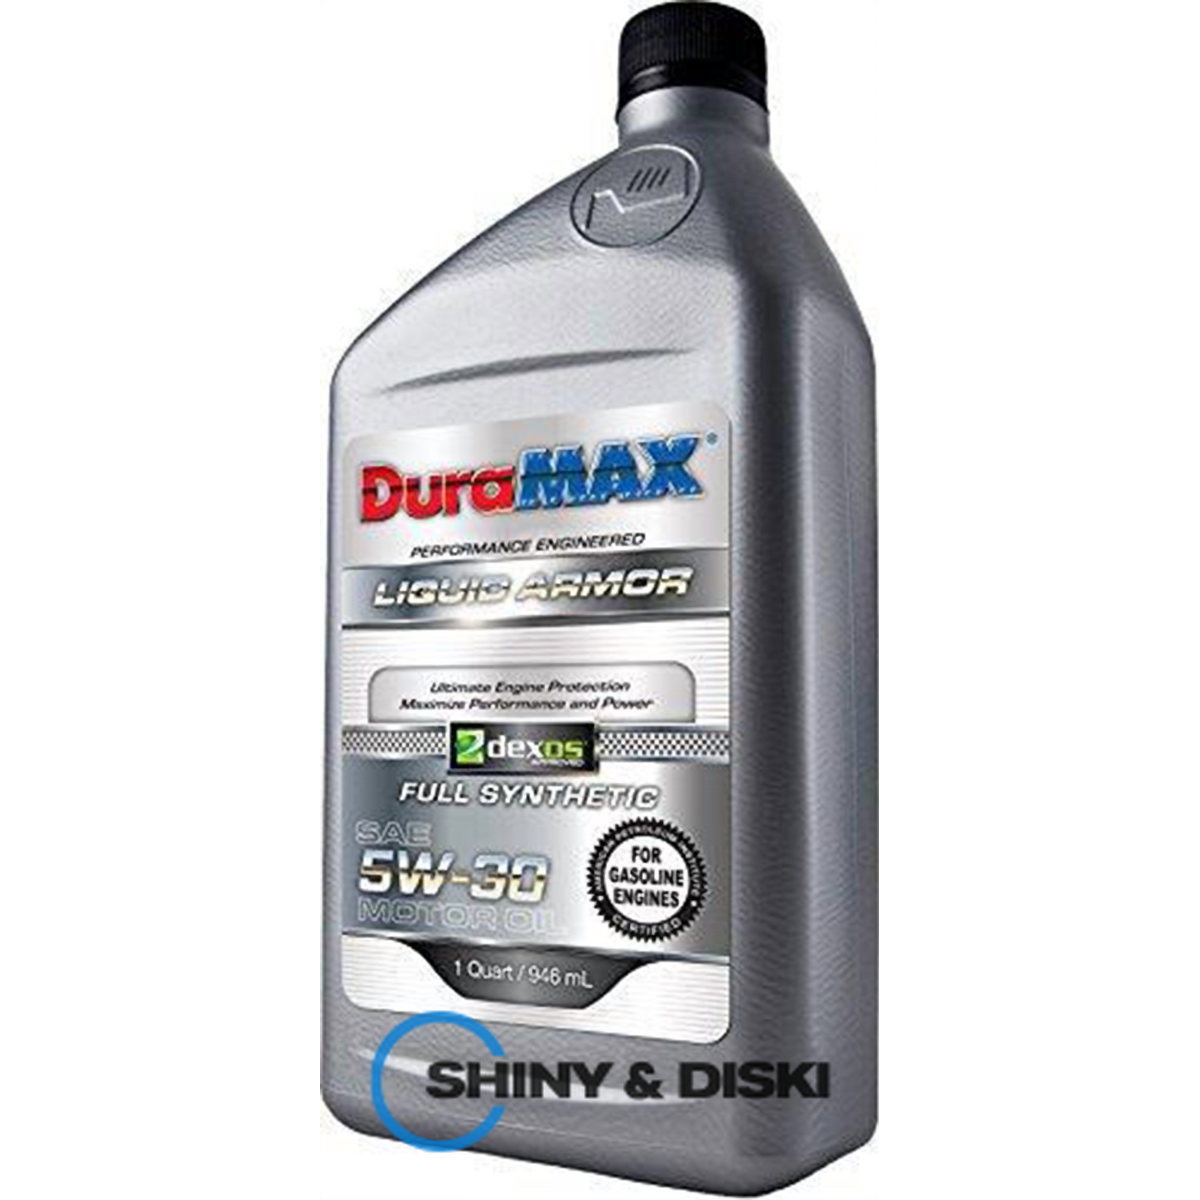 duramax full synthetic